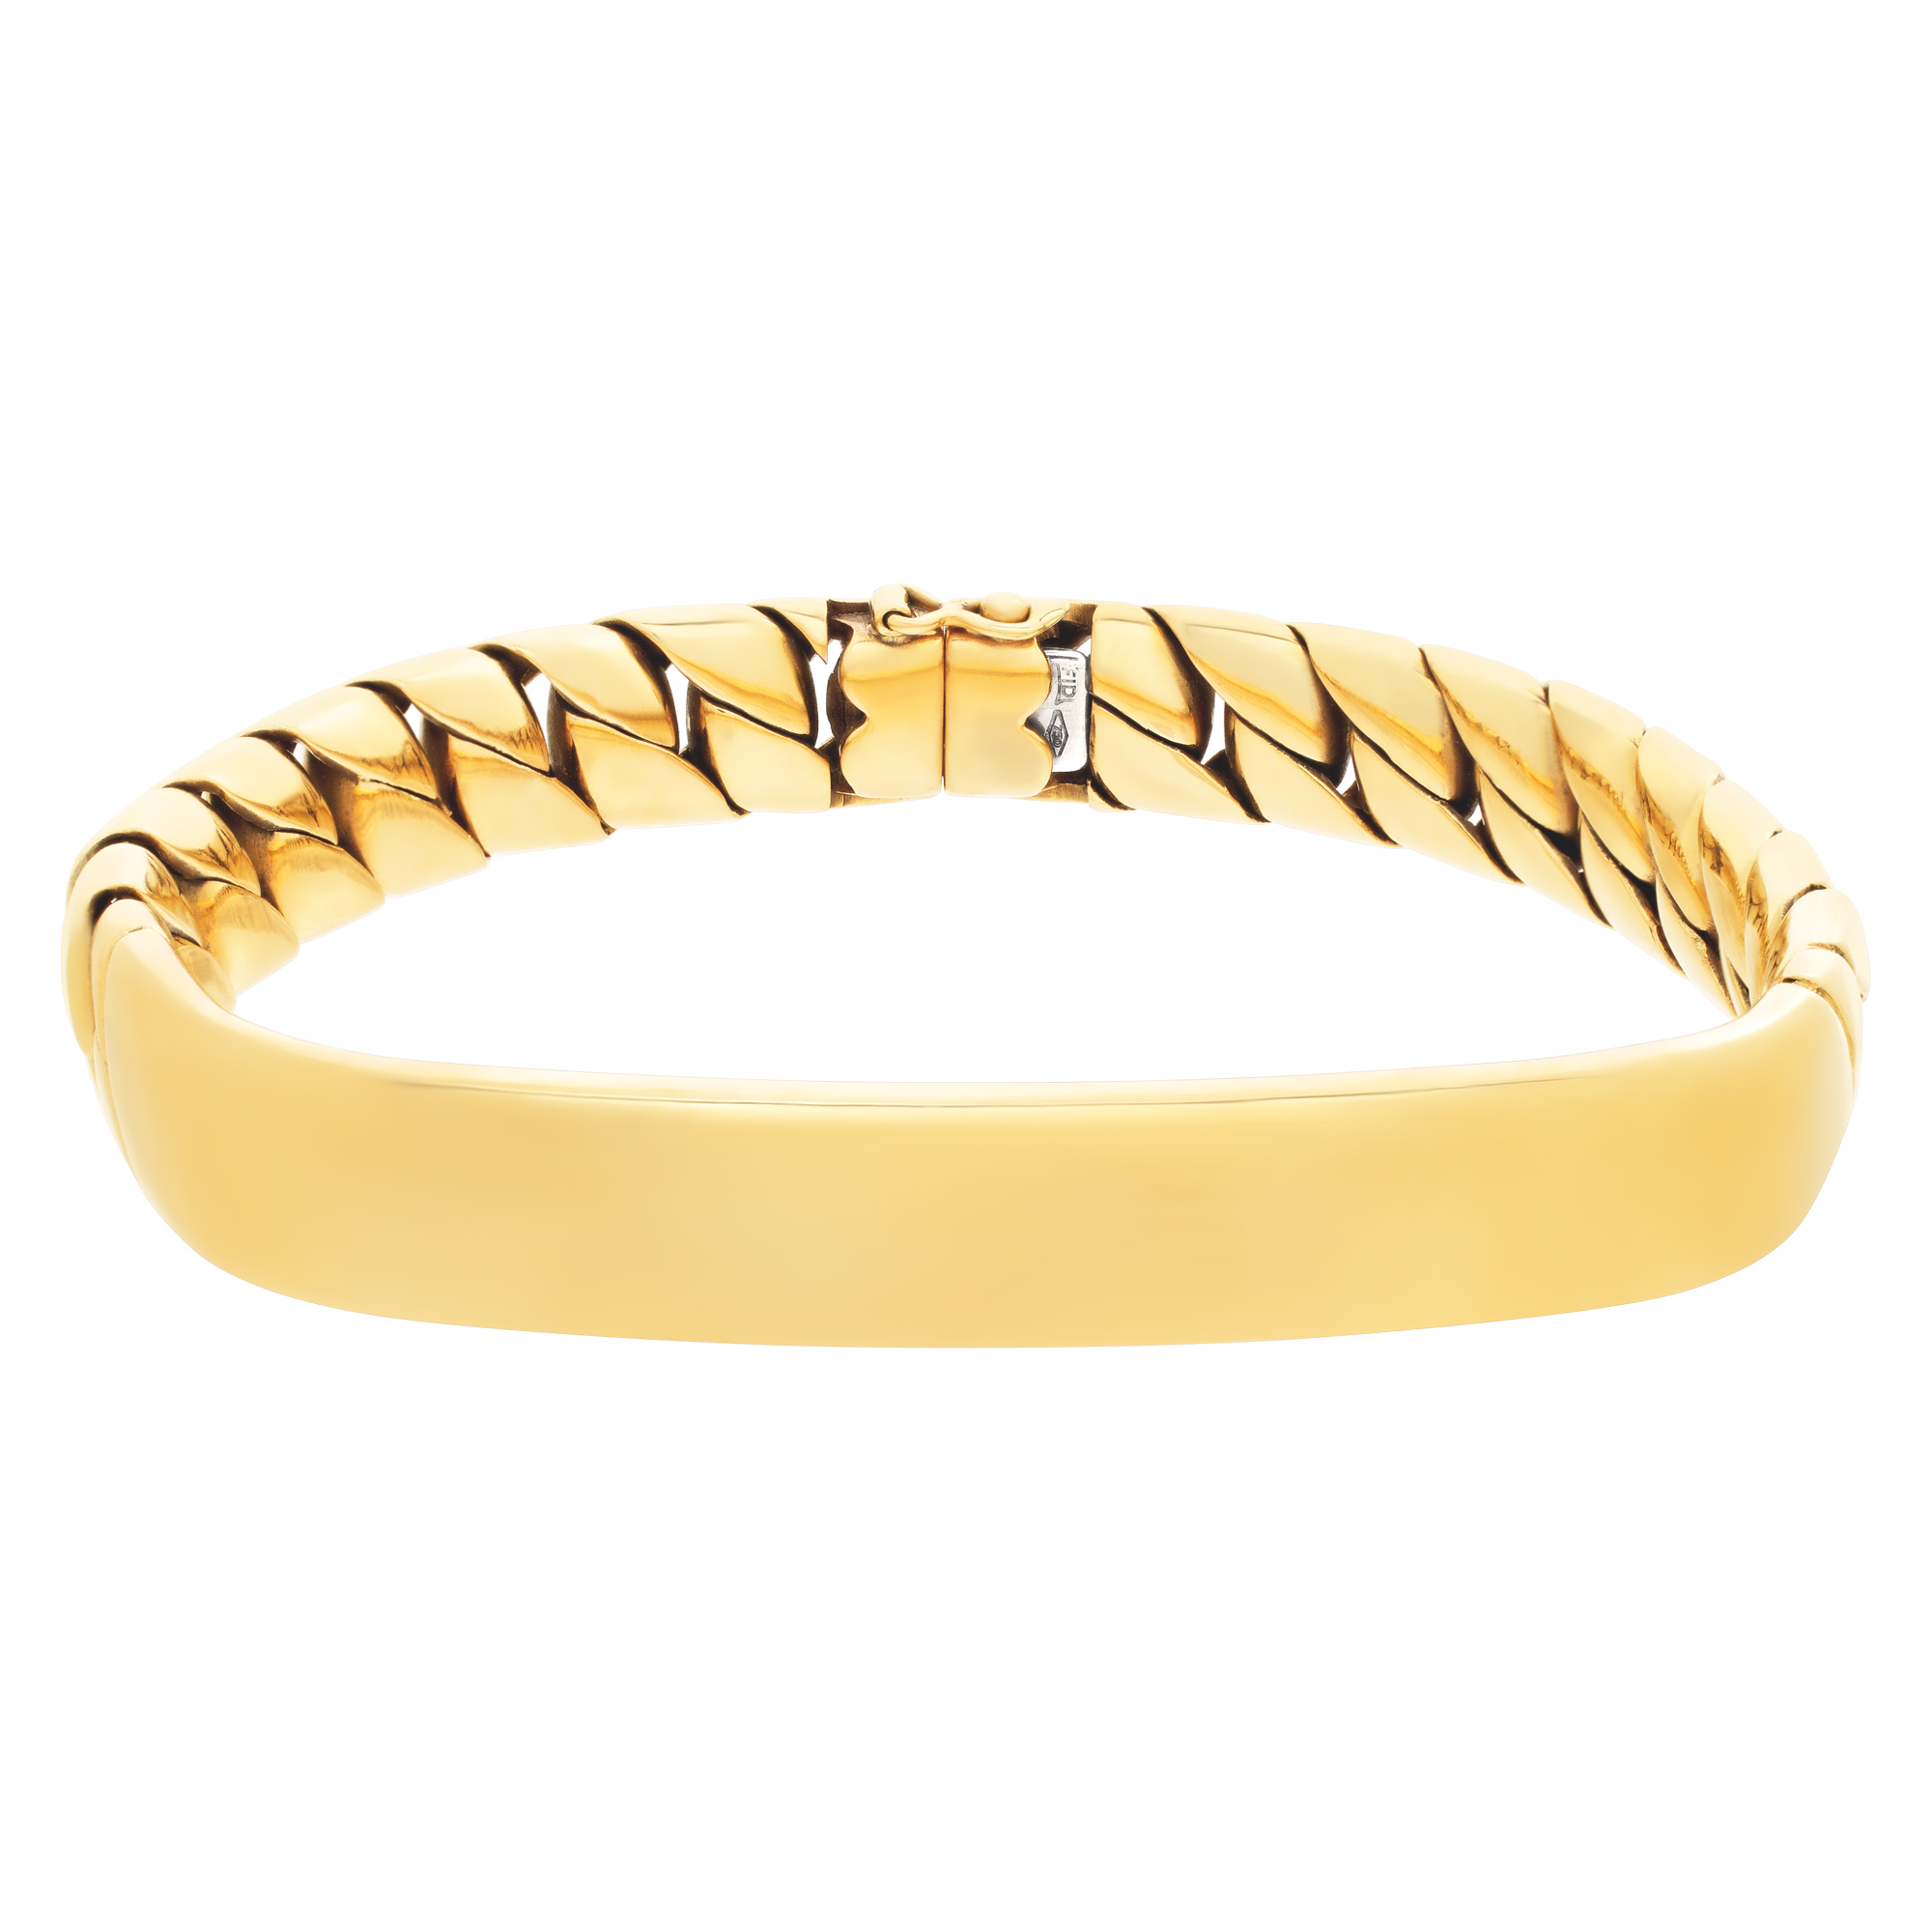 Woven link I.D. bracelet in 18k yellow gold image 1